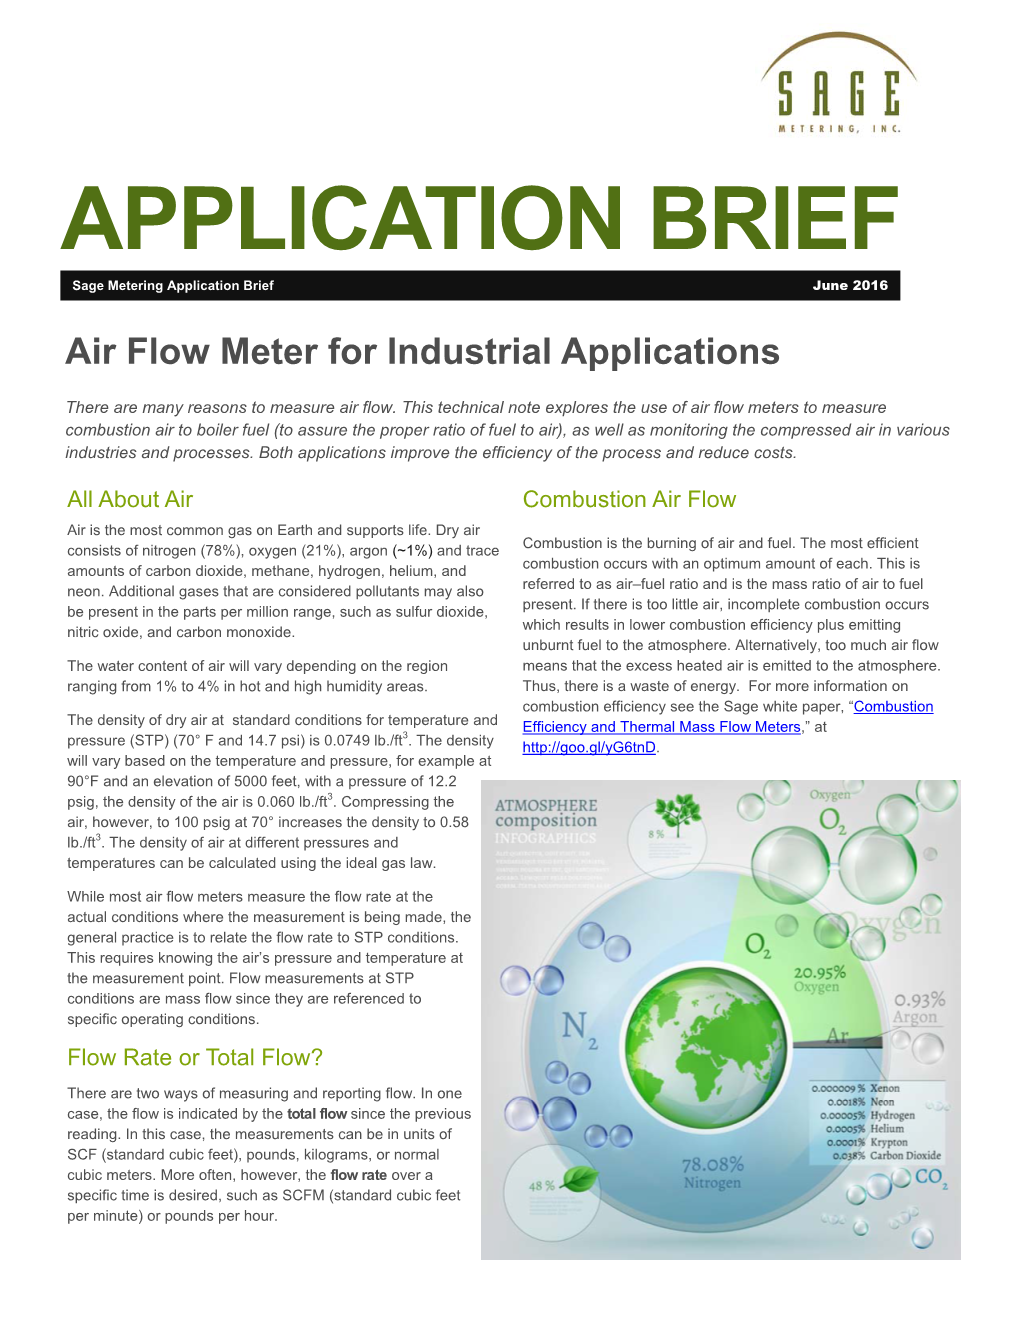 Air Flow Meter for Industrial Applications